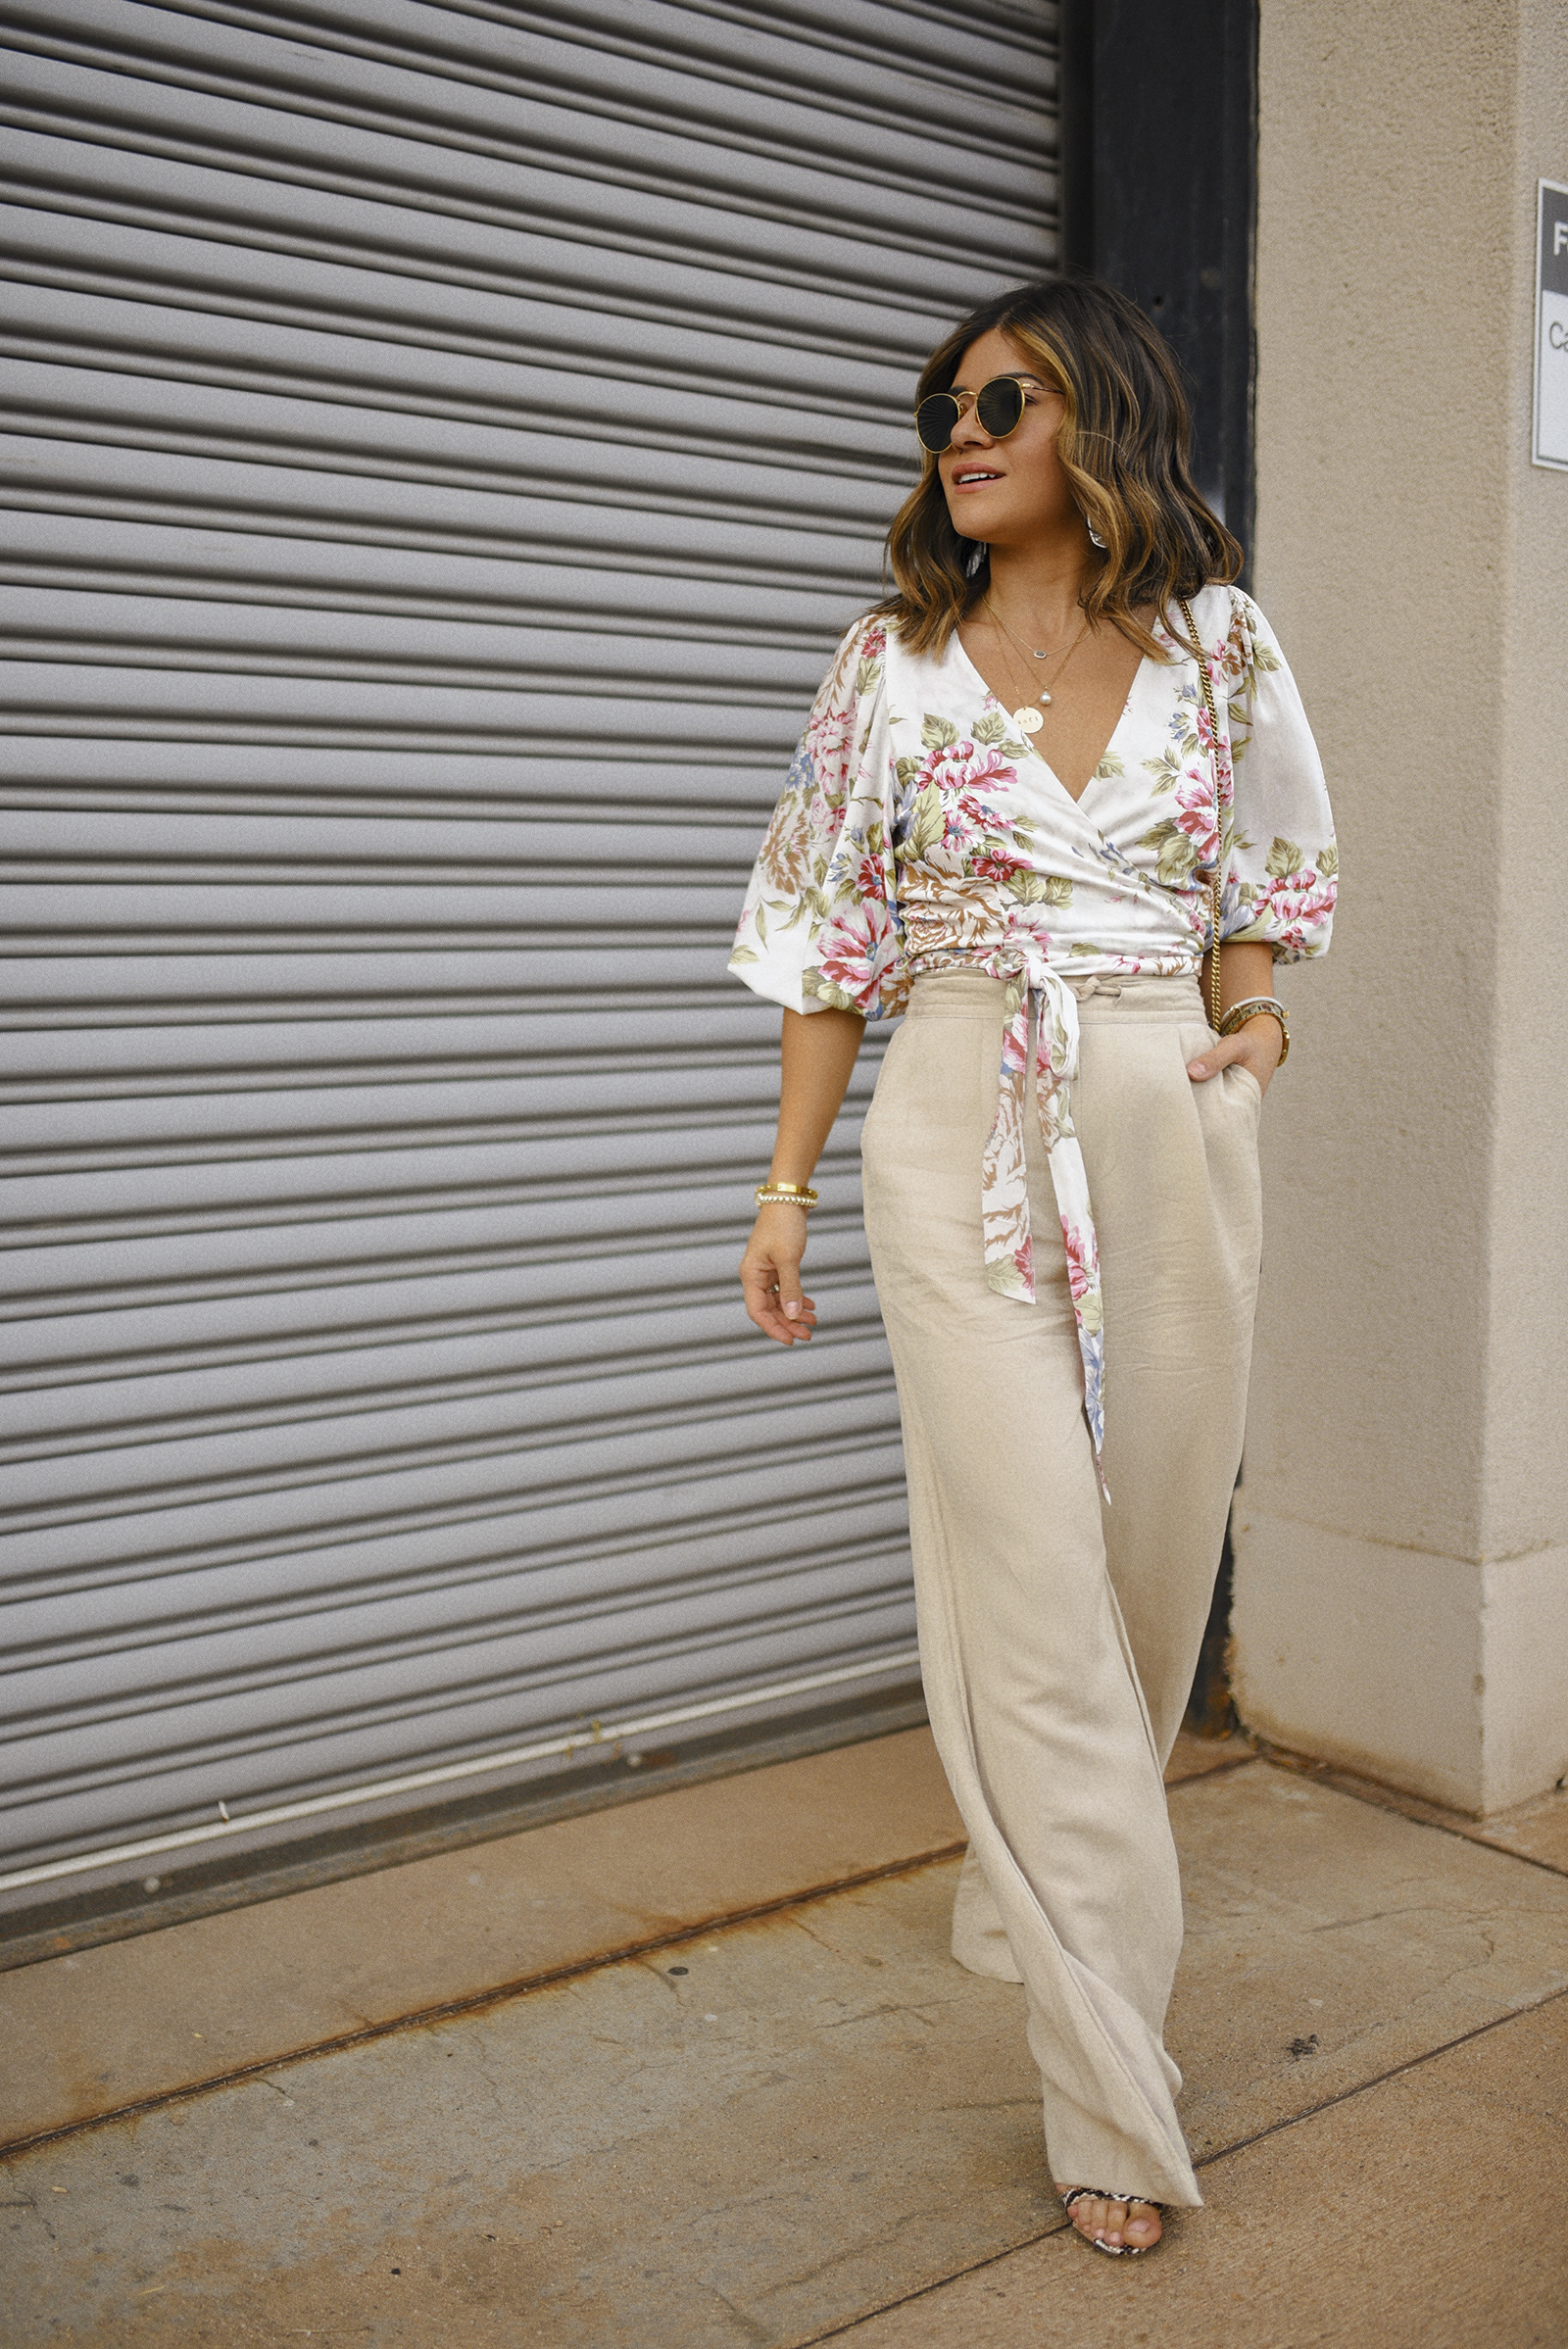 Carolina Hellal of Chic Talk wearing a floral wrap top via Verishop, Linen pants via Target, Rayban rounded sunglasses and a Gucci crossbody bag